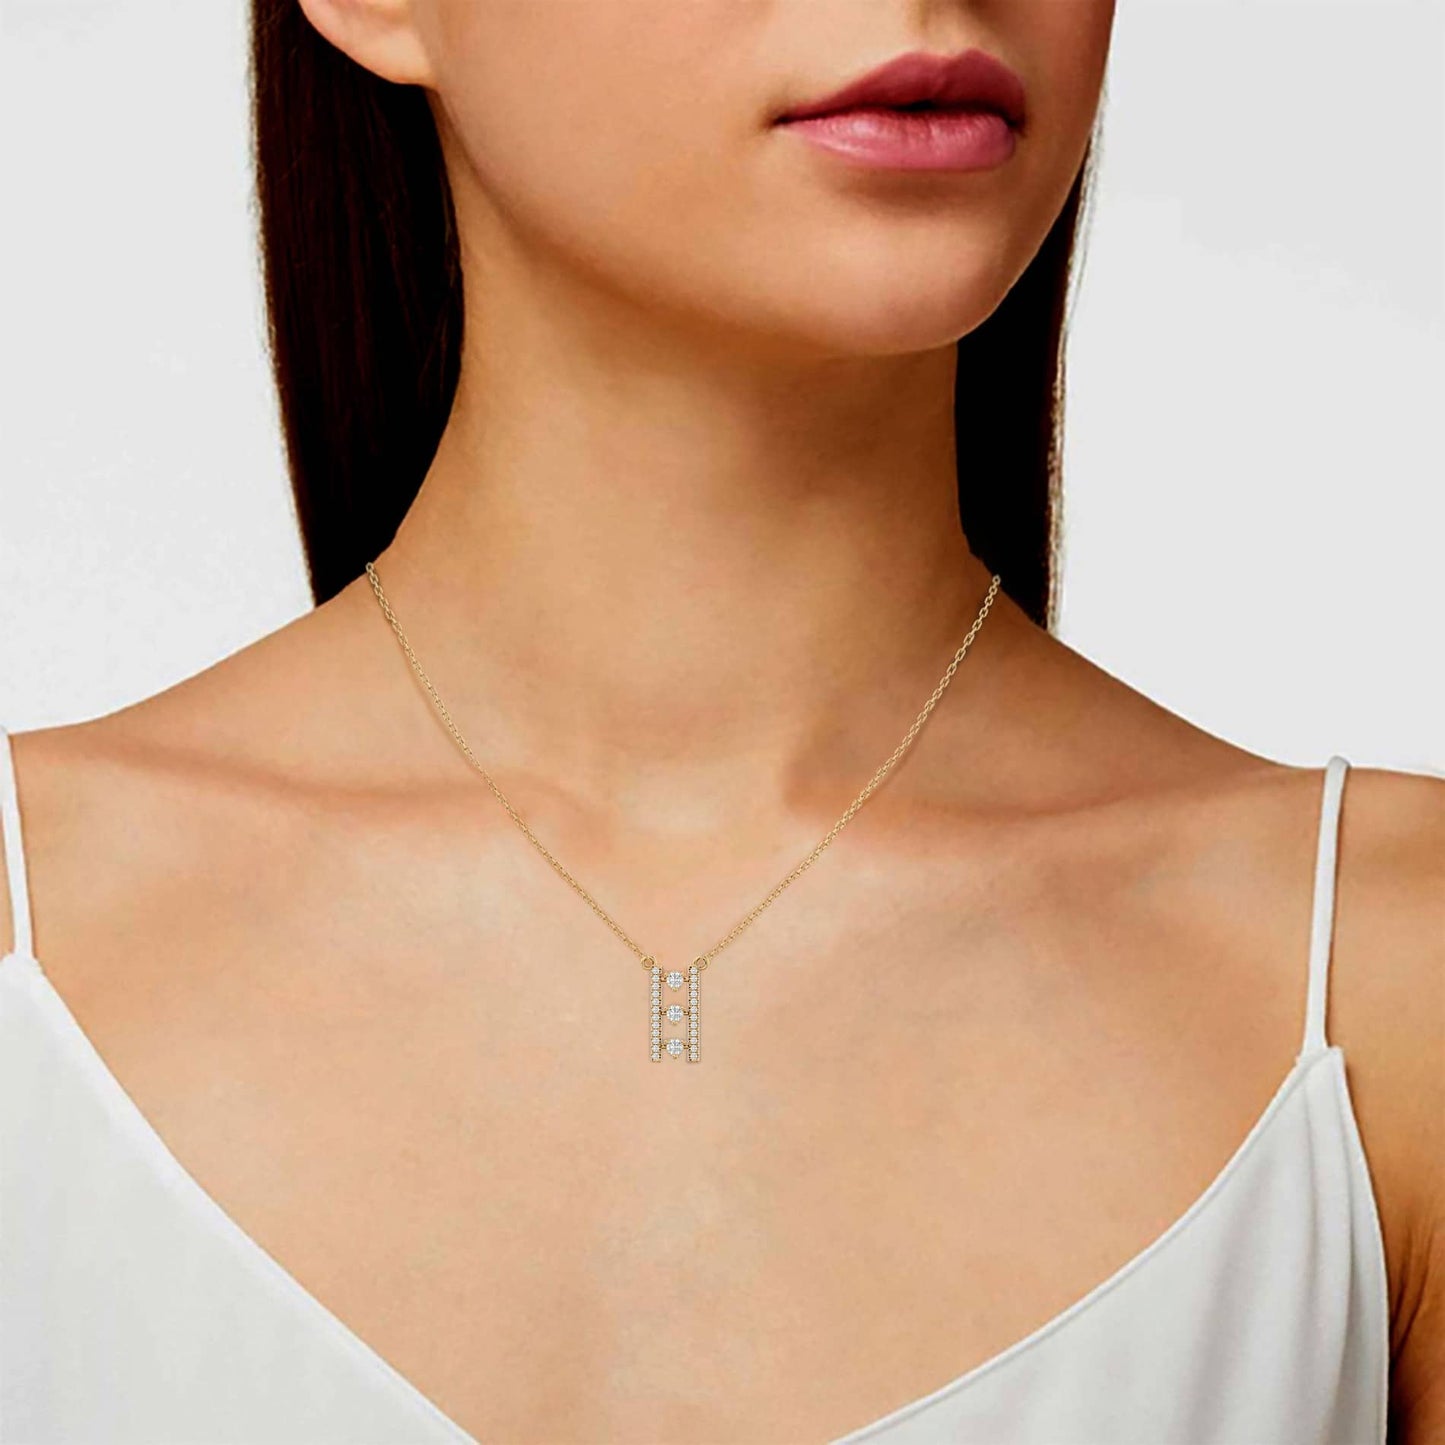 woman wearing a diamonds necklace